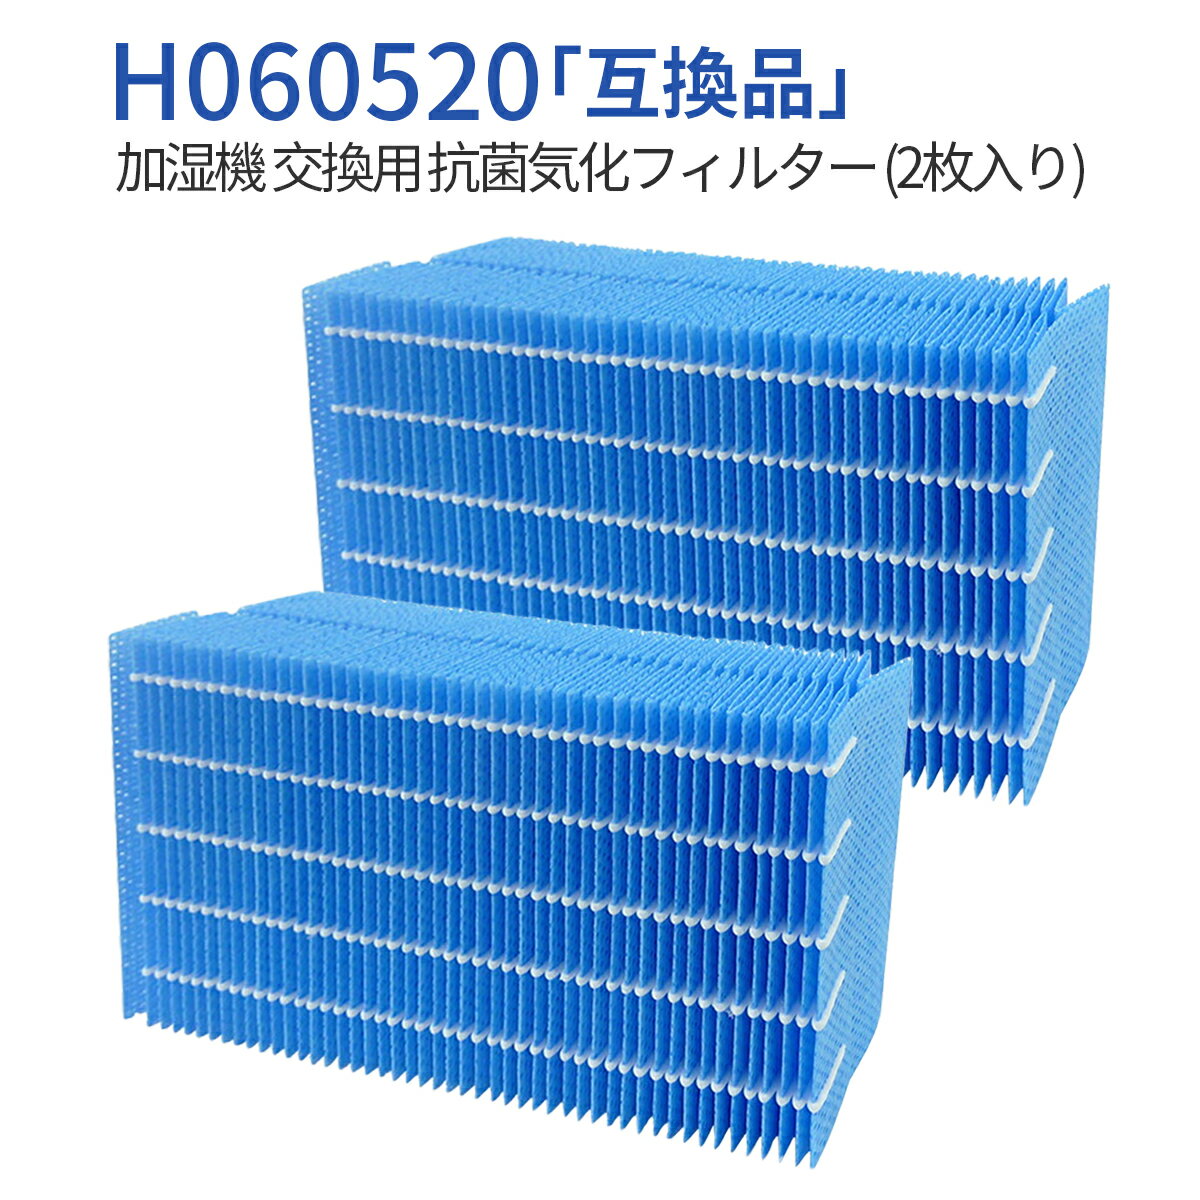 H060520 加湿器 フィルター 抗菌気化フィルターh060520 ダイニチ加湿機 HD-LX1019 HD-LX1020 HD-LX1219 HD-LX1220 交換用加湿フィルター（2個入り）純正品ではなく互換品です